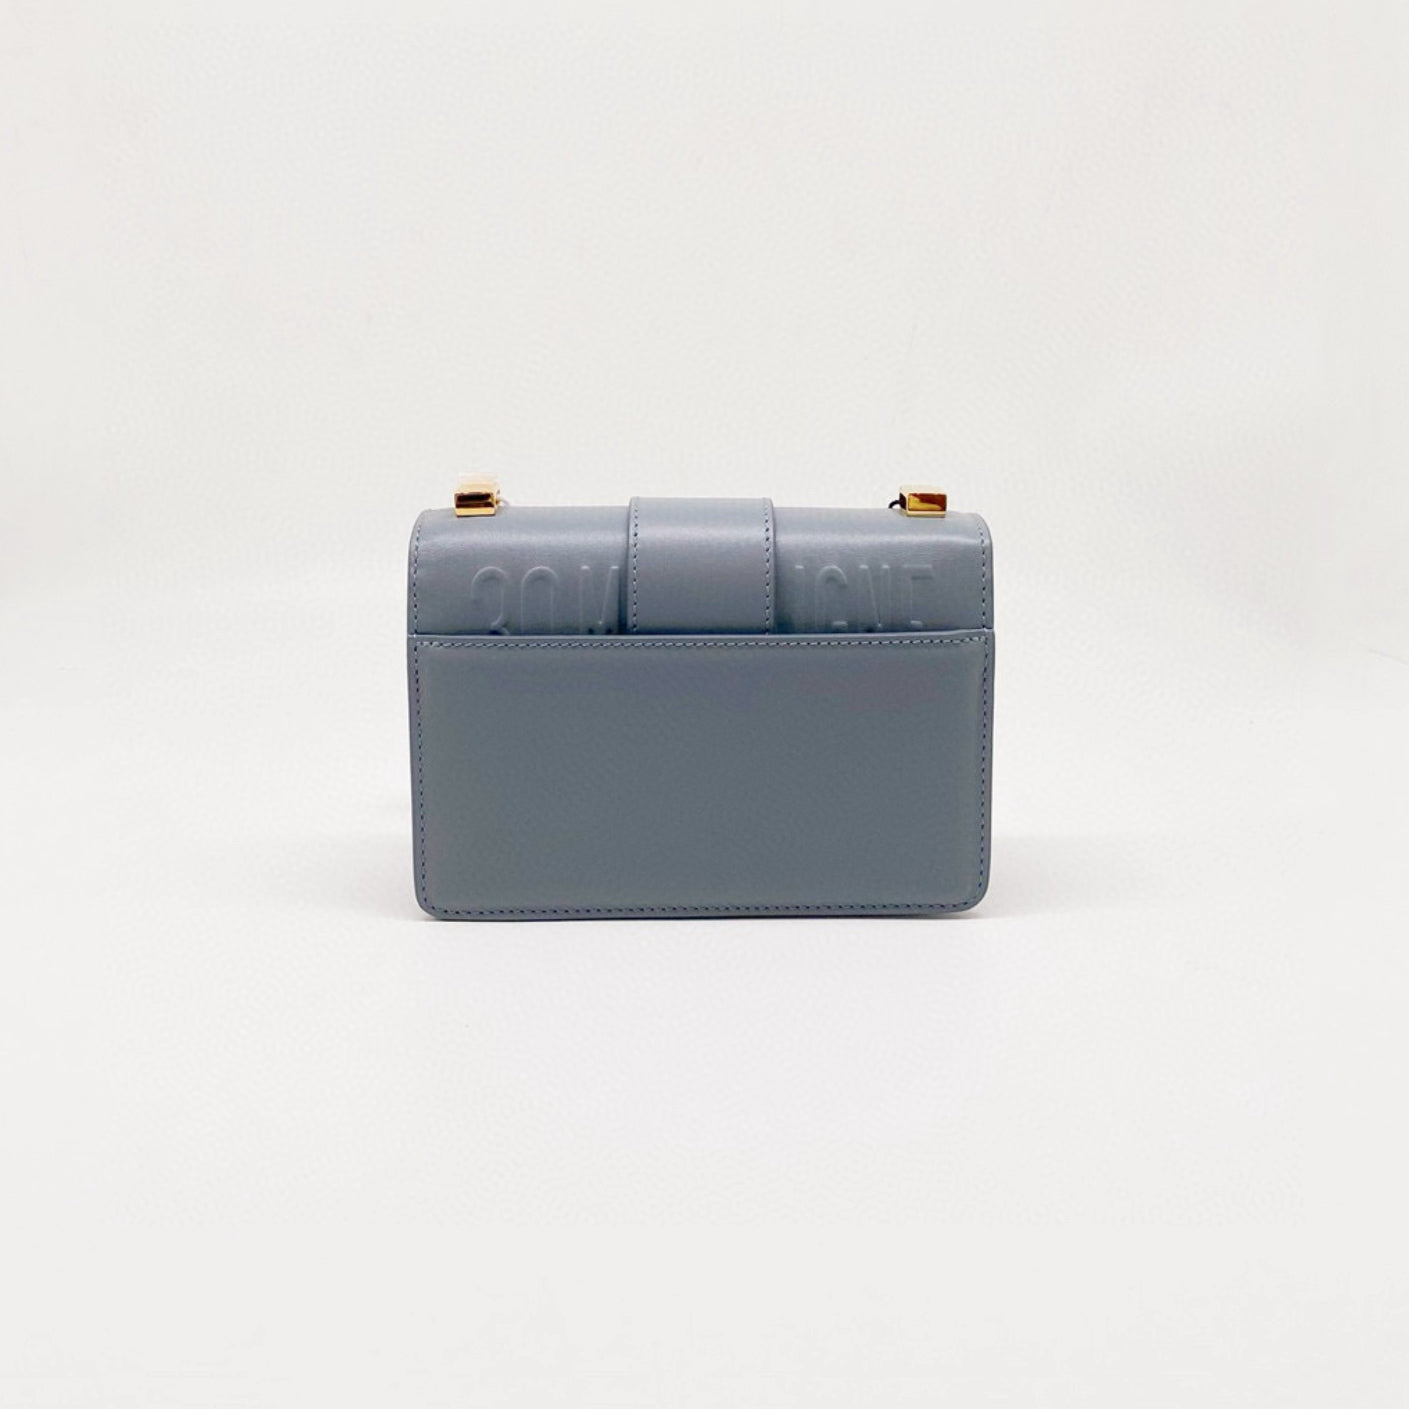 Preloved Christian Dior 30 Montaigne Micro Bag